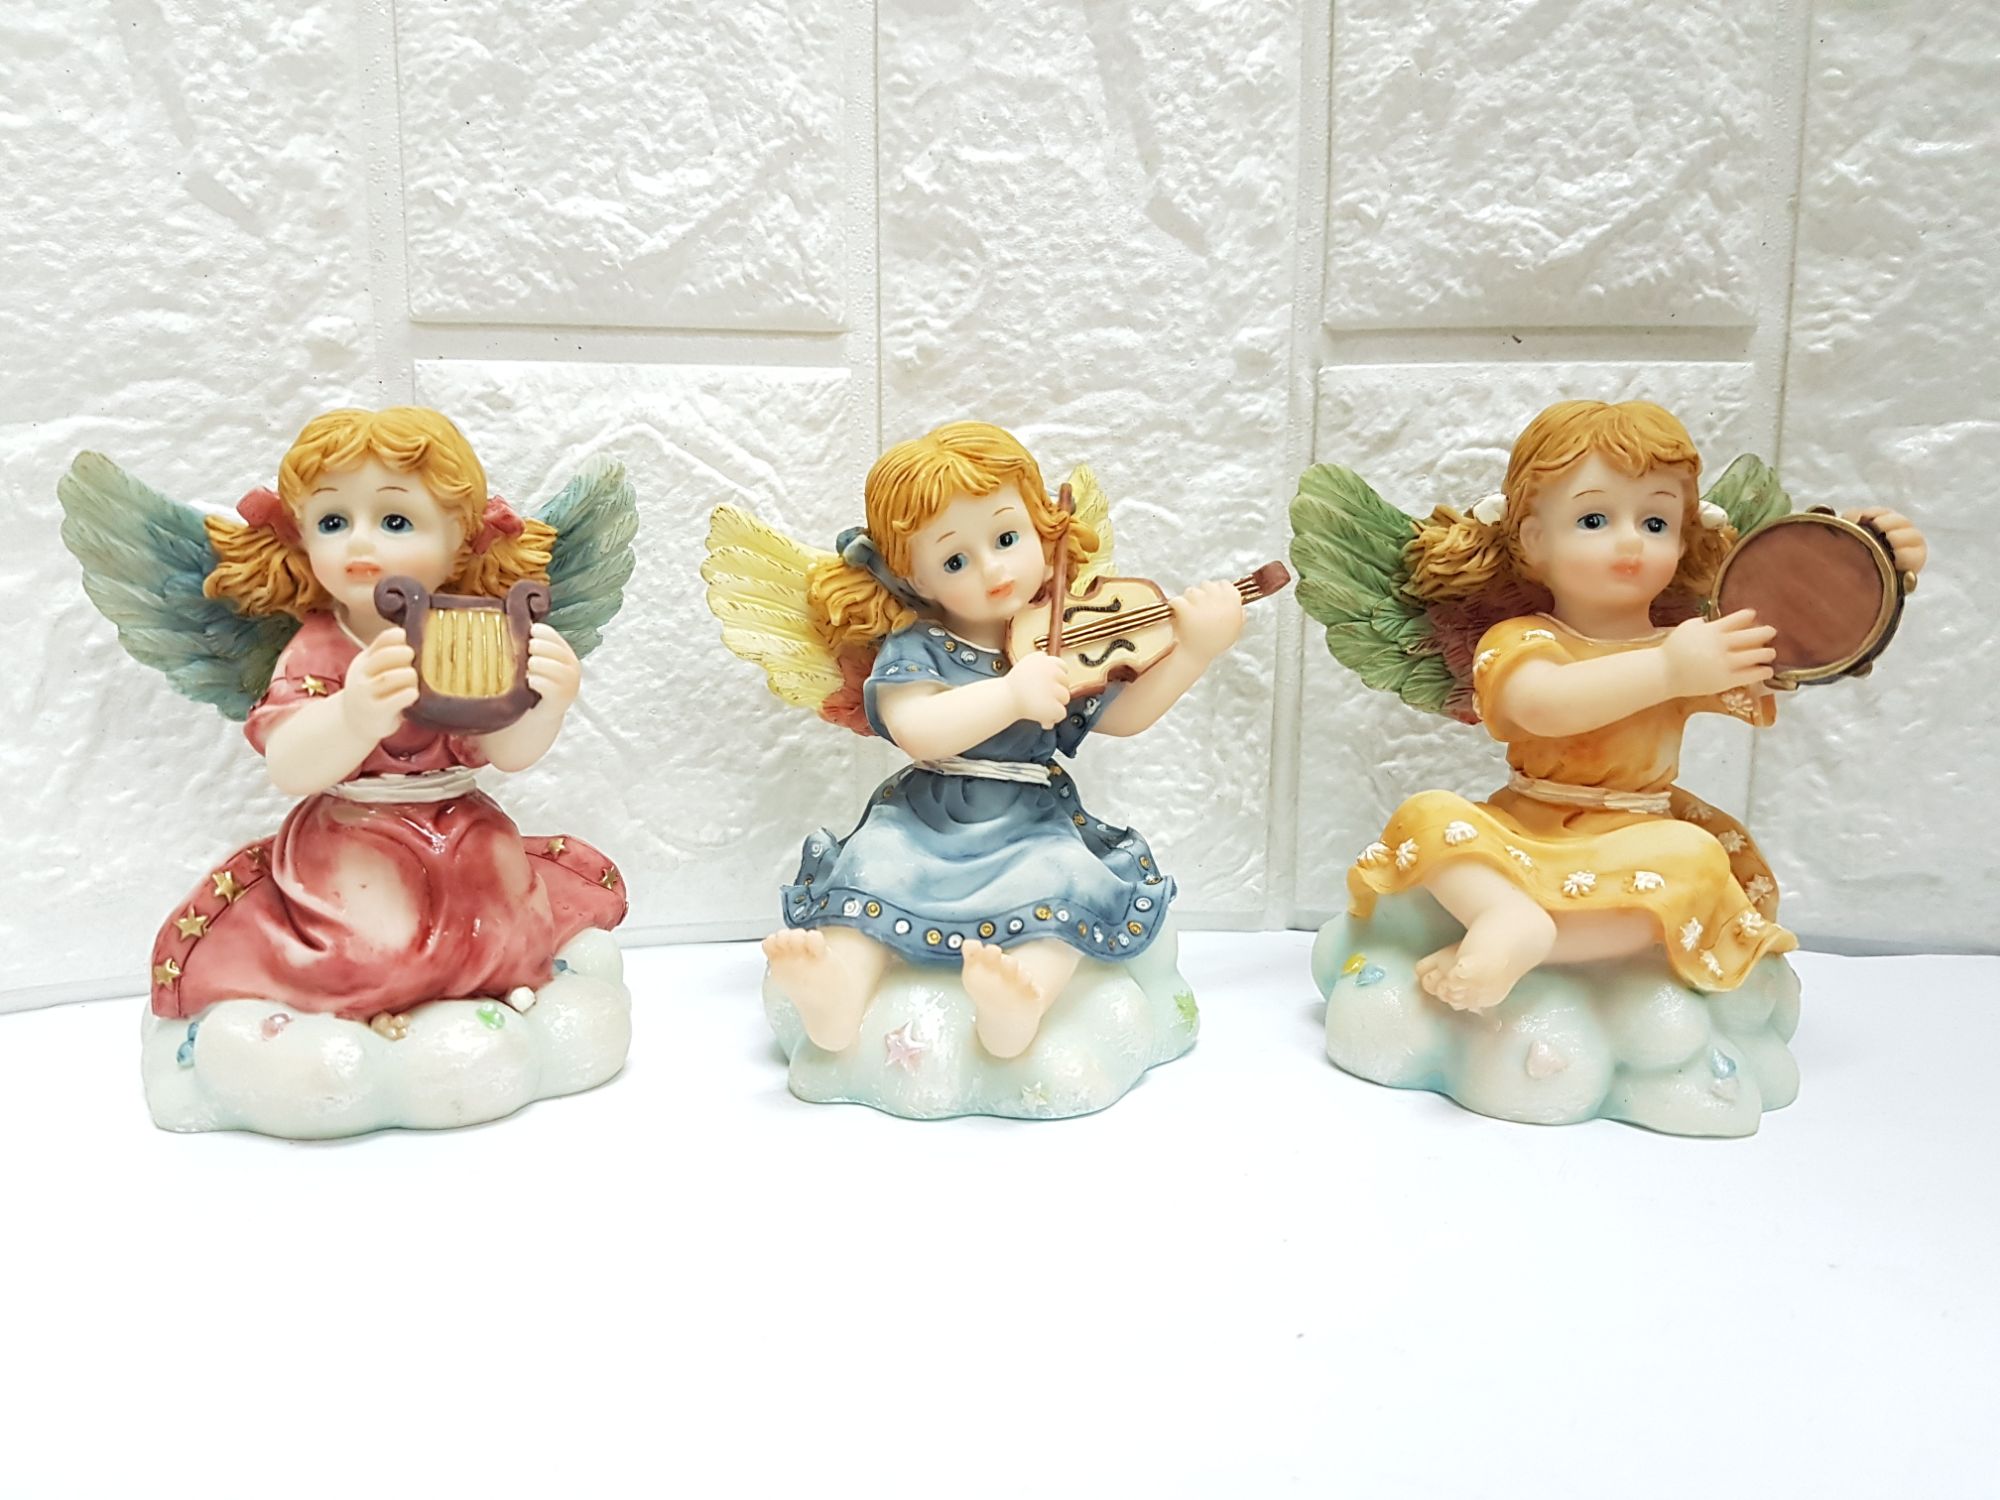 3.5 inches girl angel figurine